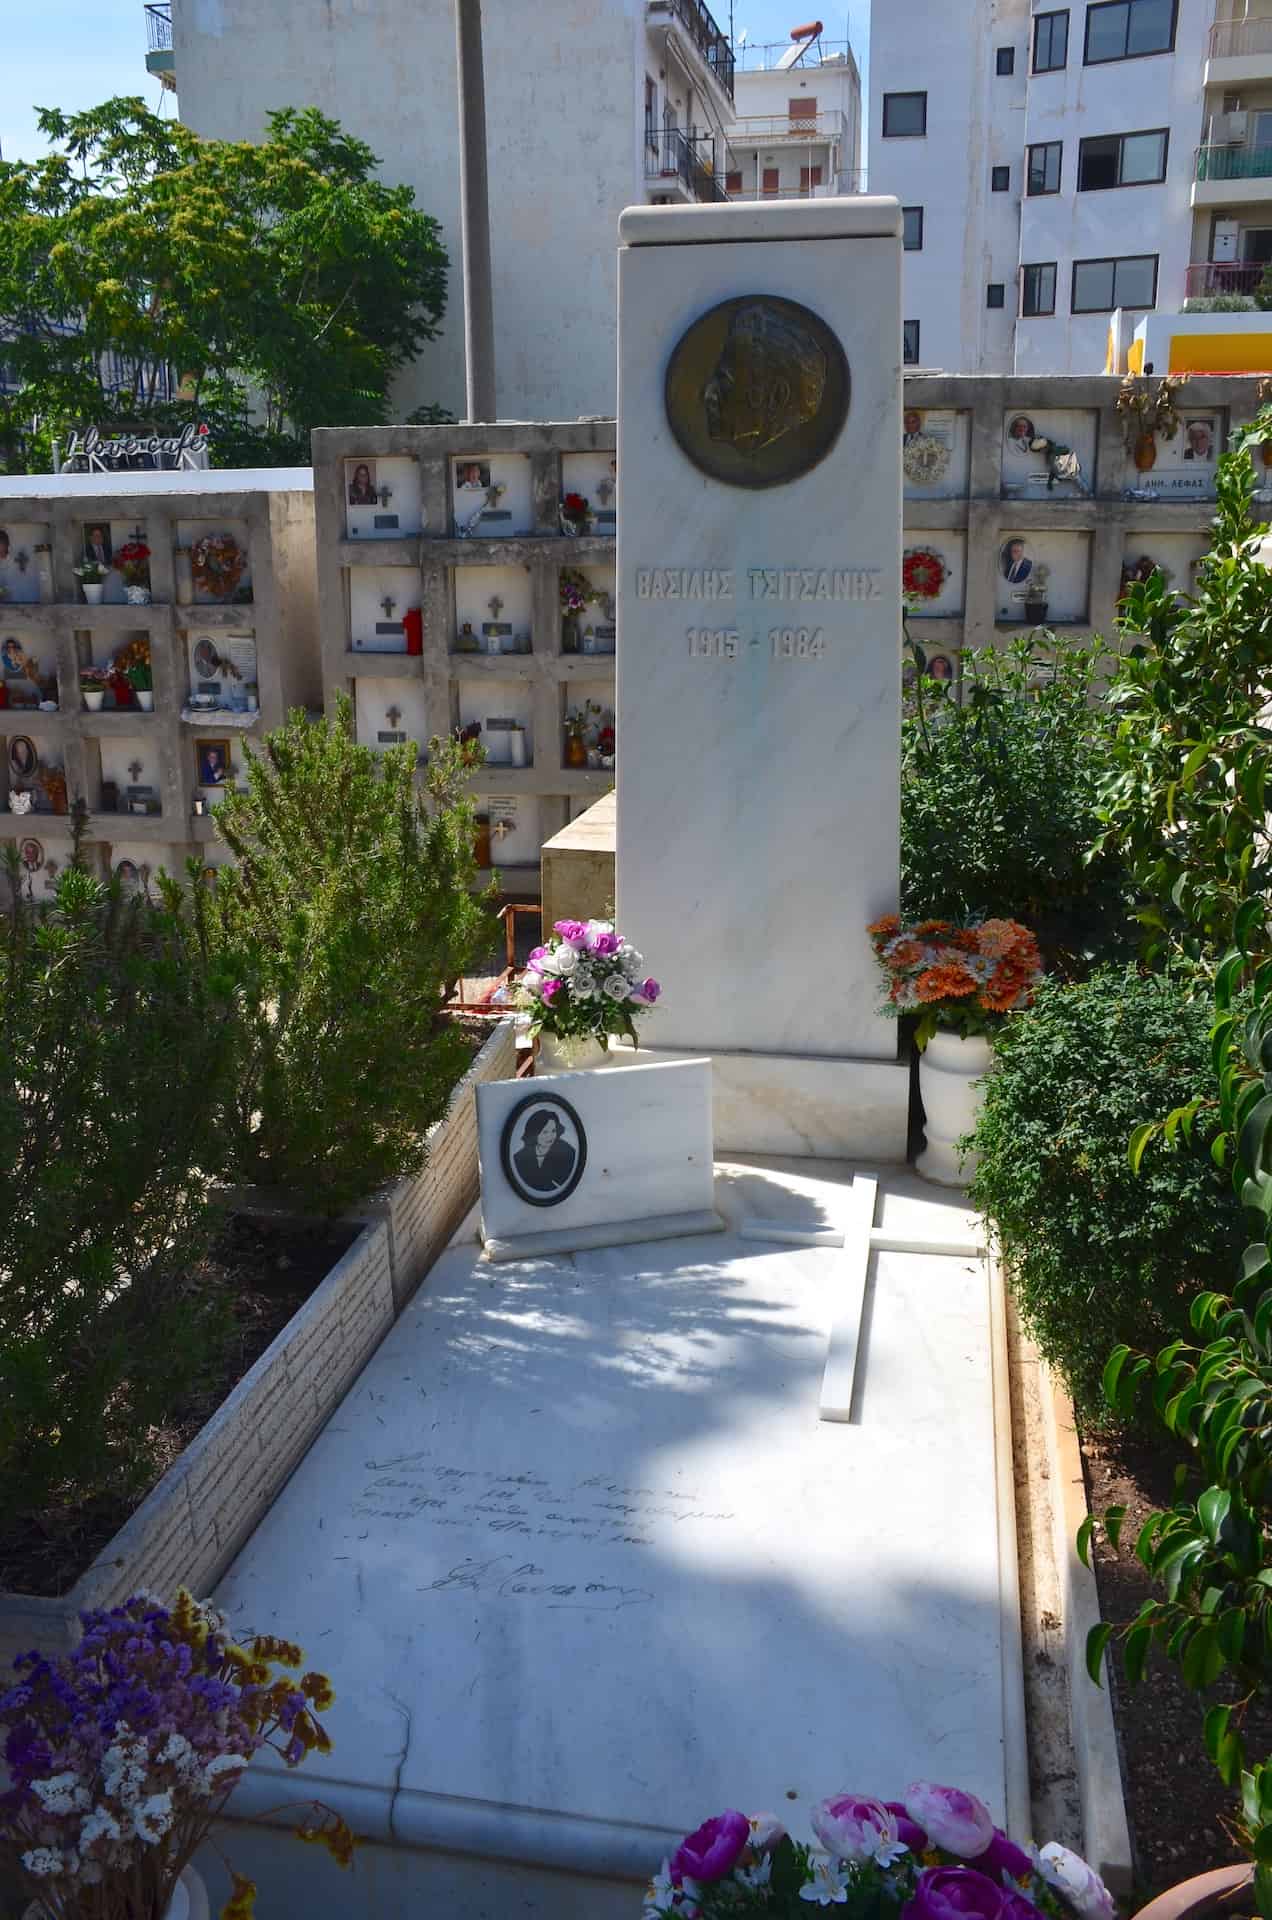 Vasilis Tsitsanis at the First Cemetery of Athens, Greece